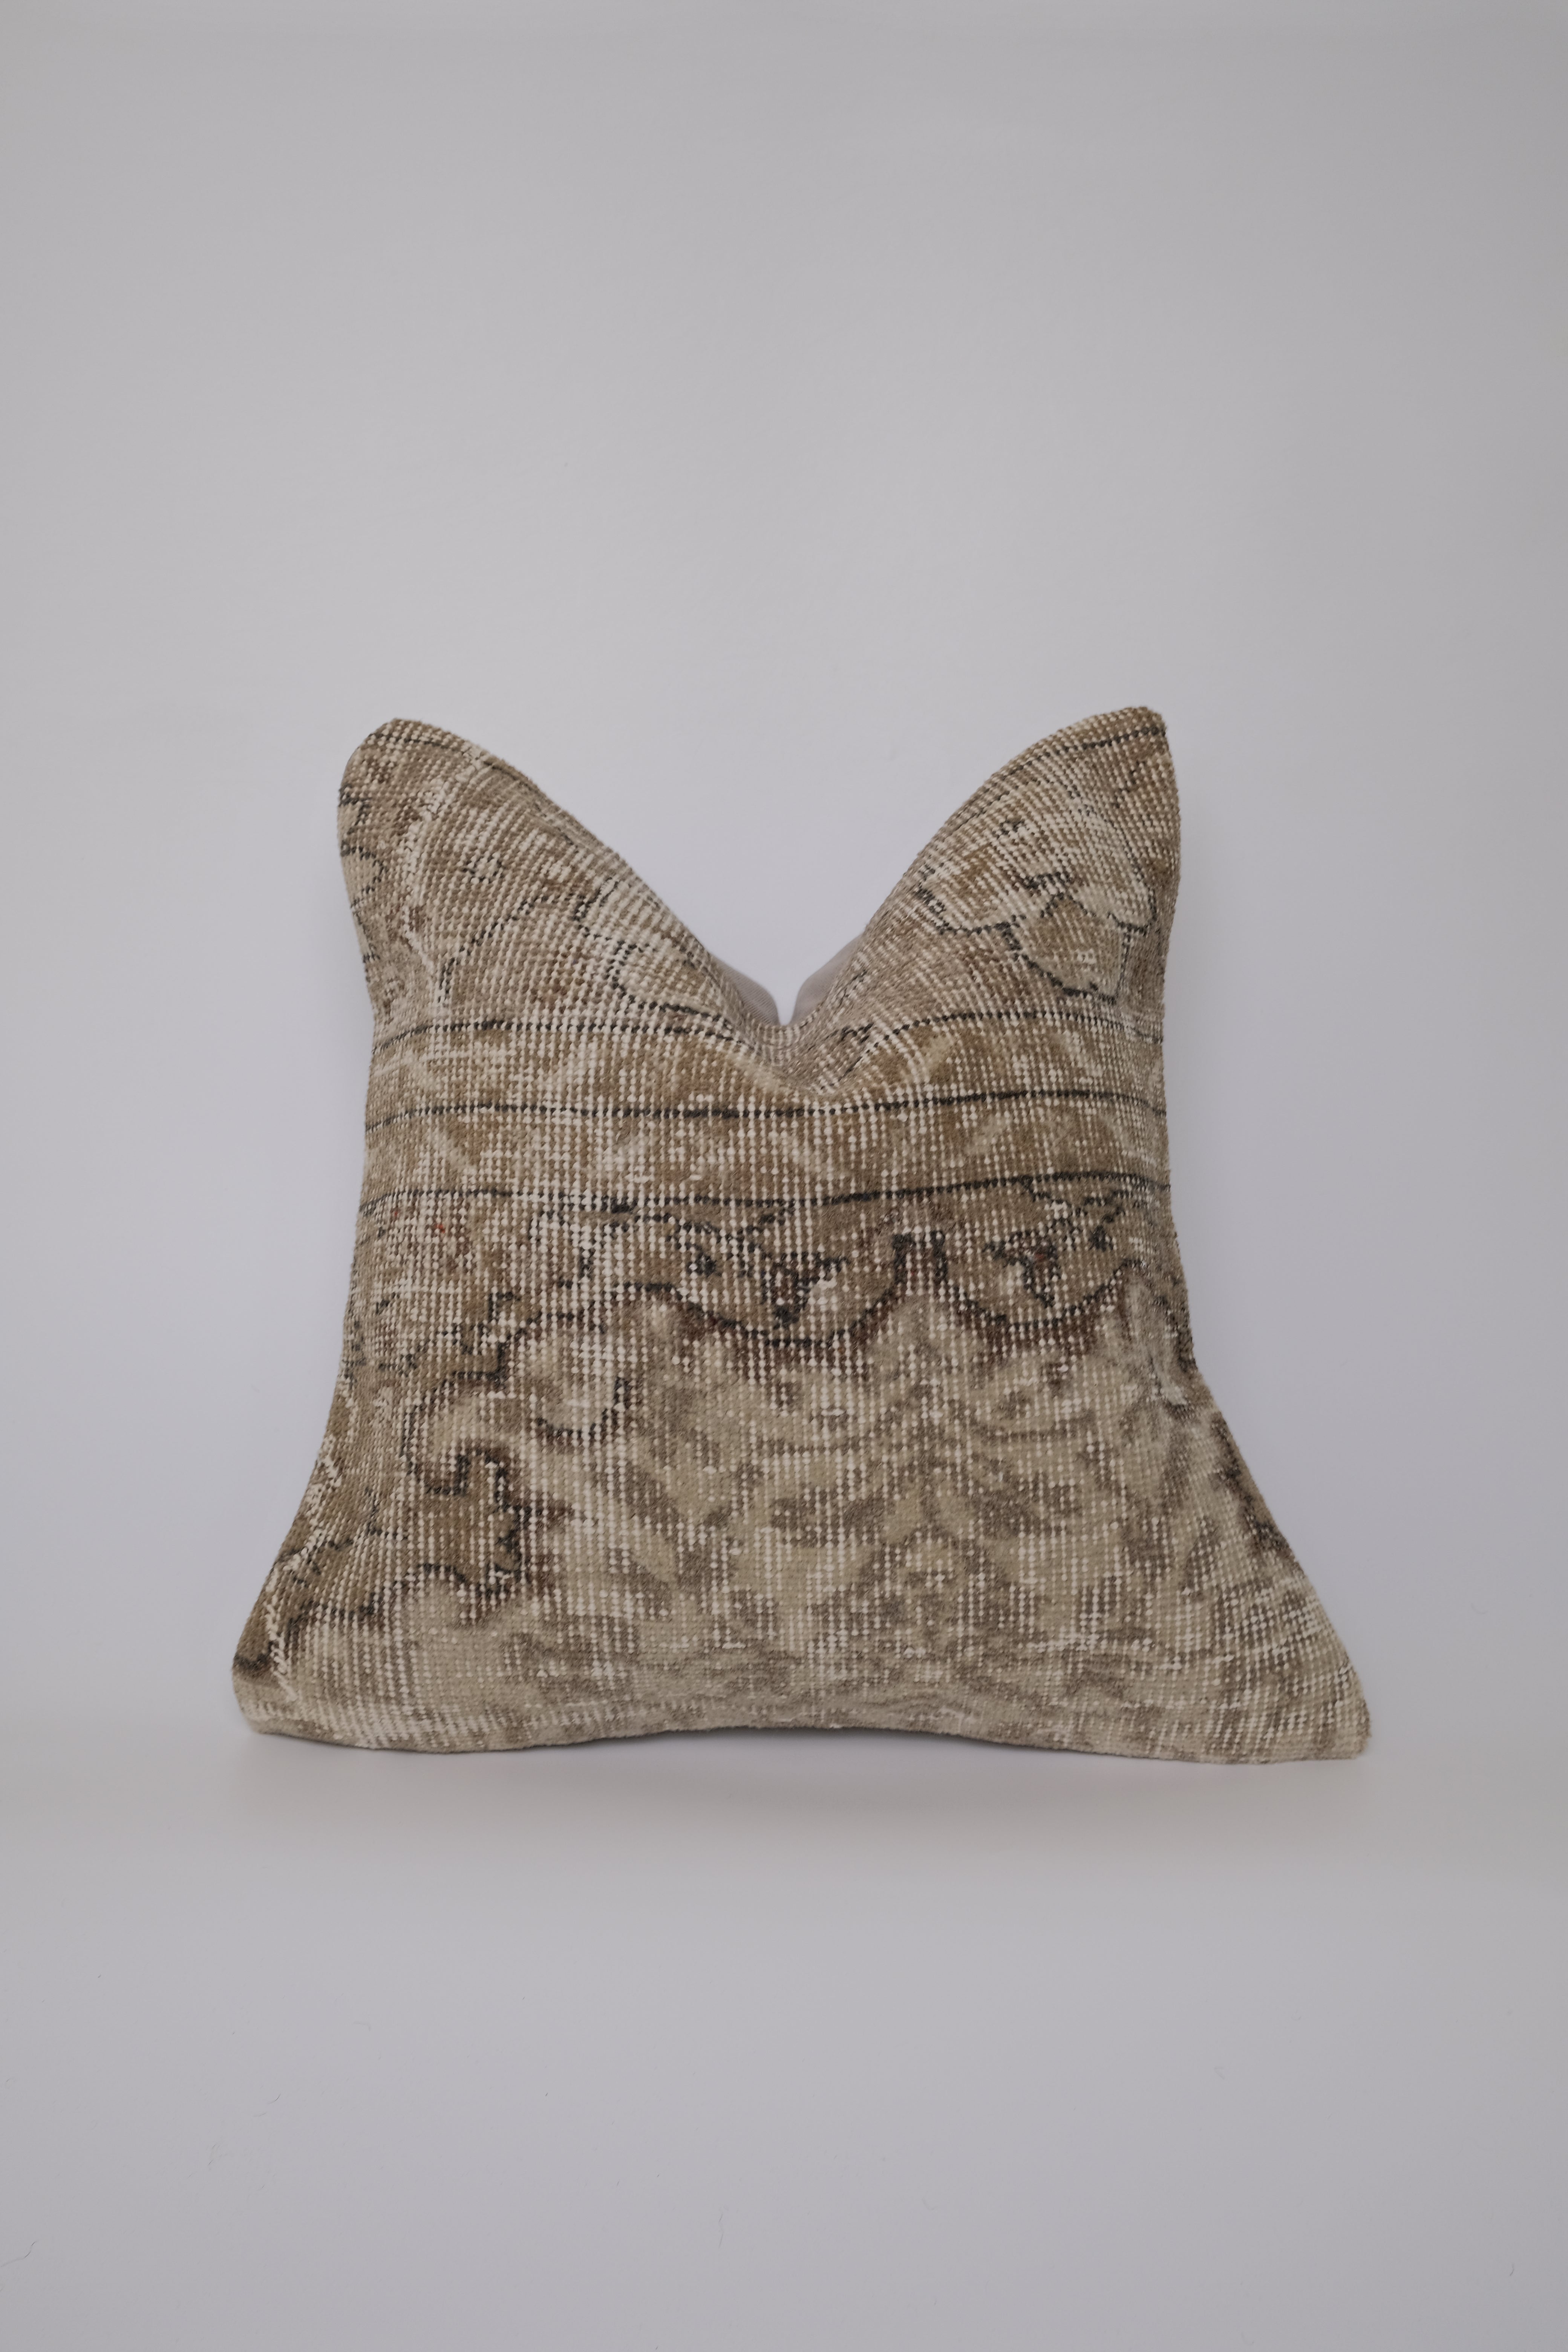 Kaan Turkish Vintage Rug Pillow